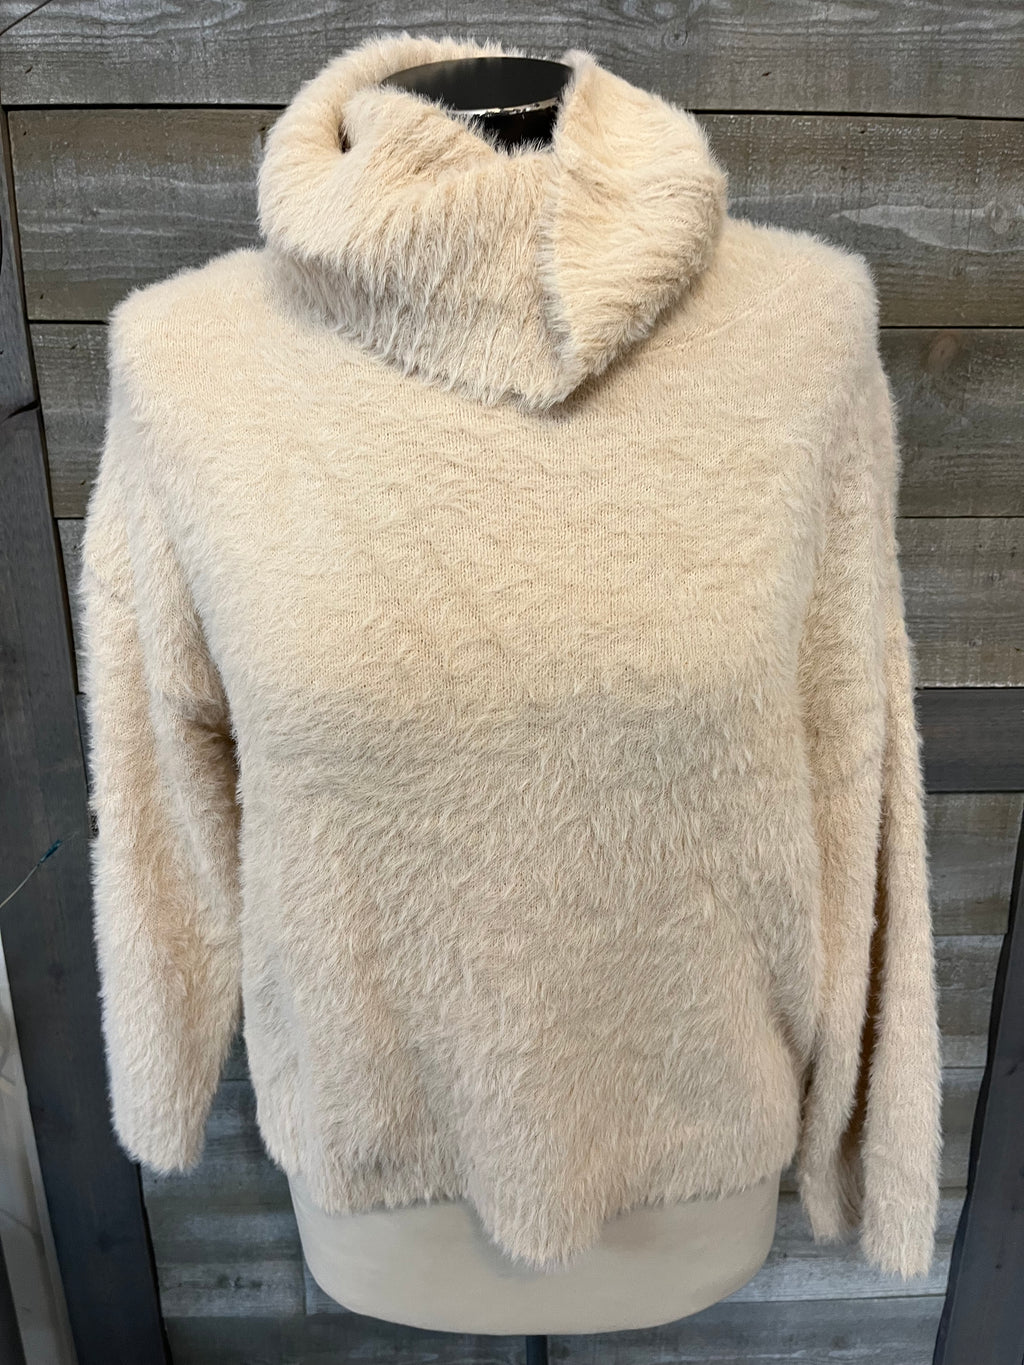 Tan Cowl Neck Sweater – Azalea Park Fashion